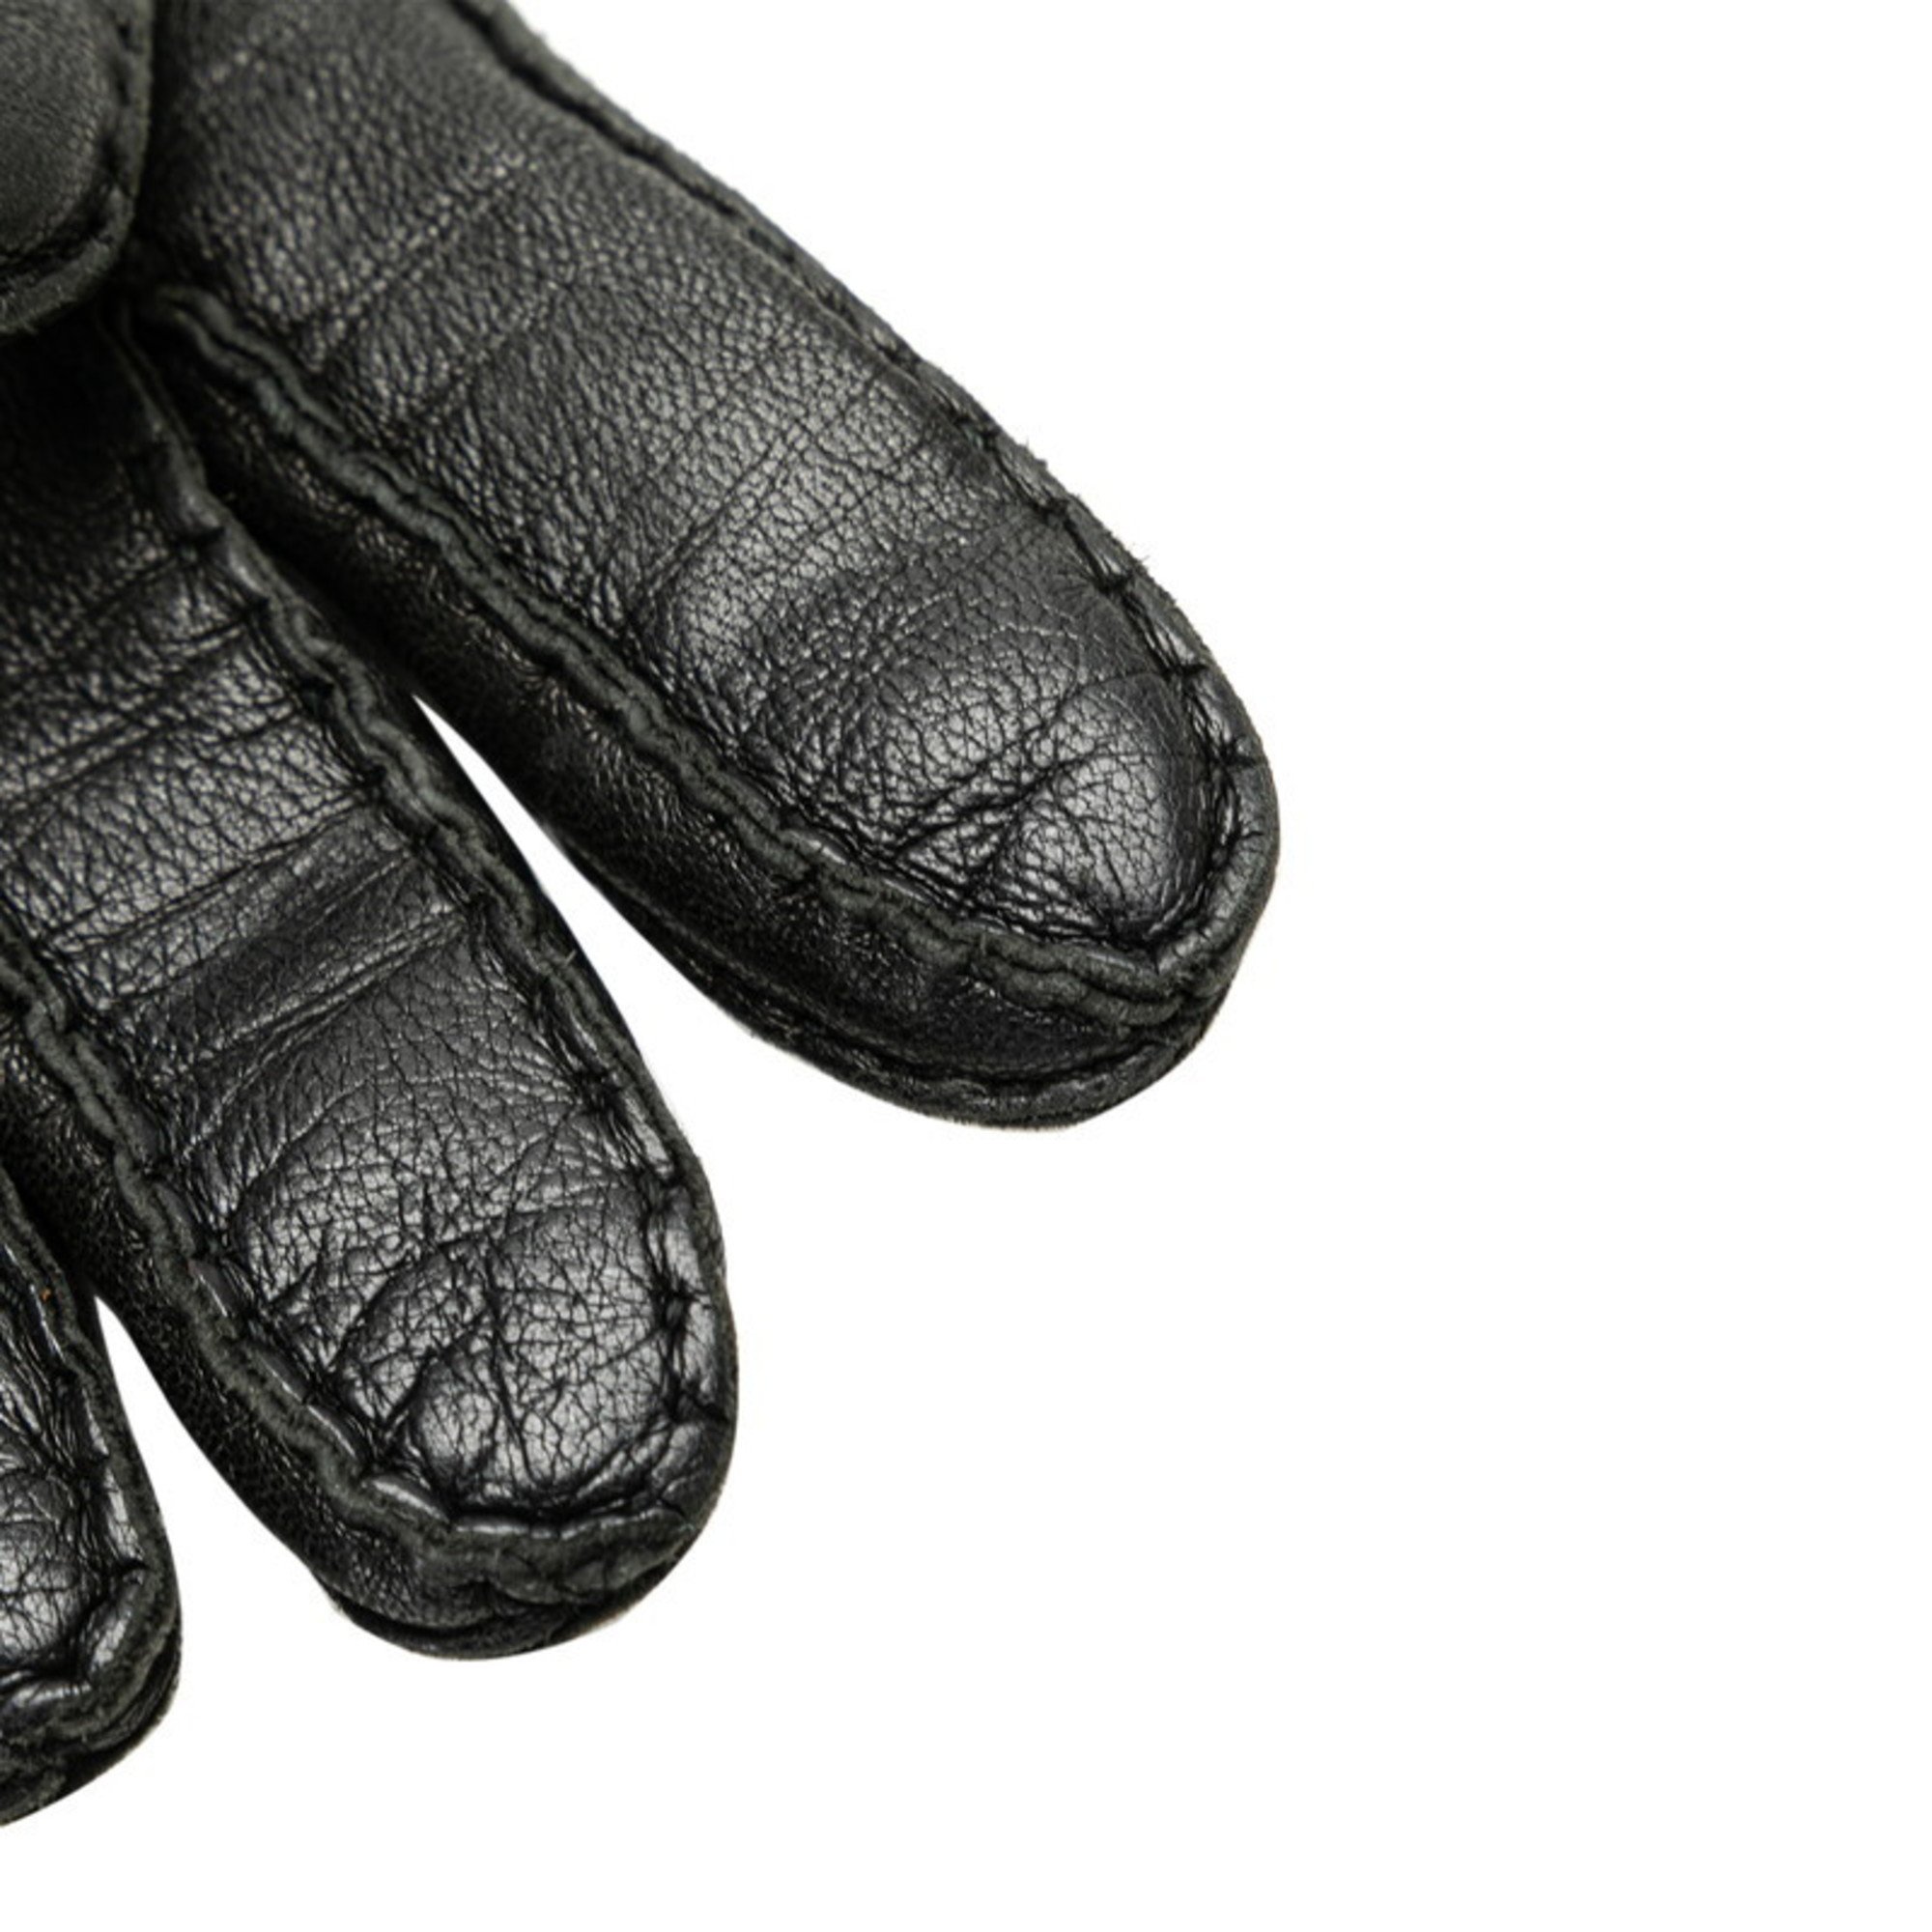 Gucci Horsebit Gloves 603635 Black Leather Women's GUCCI